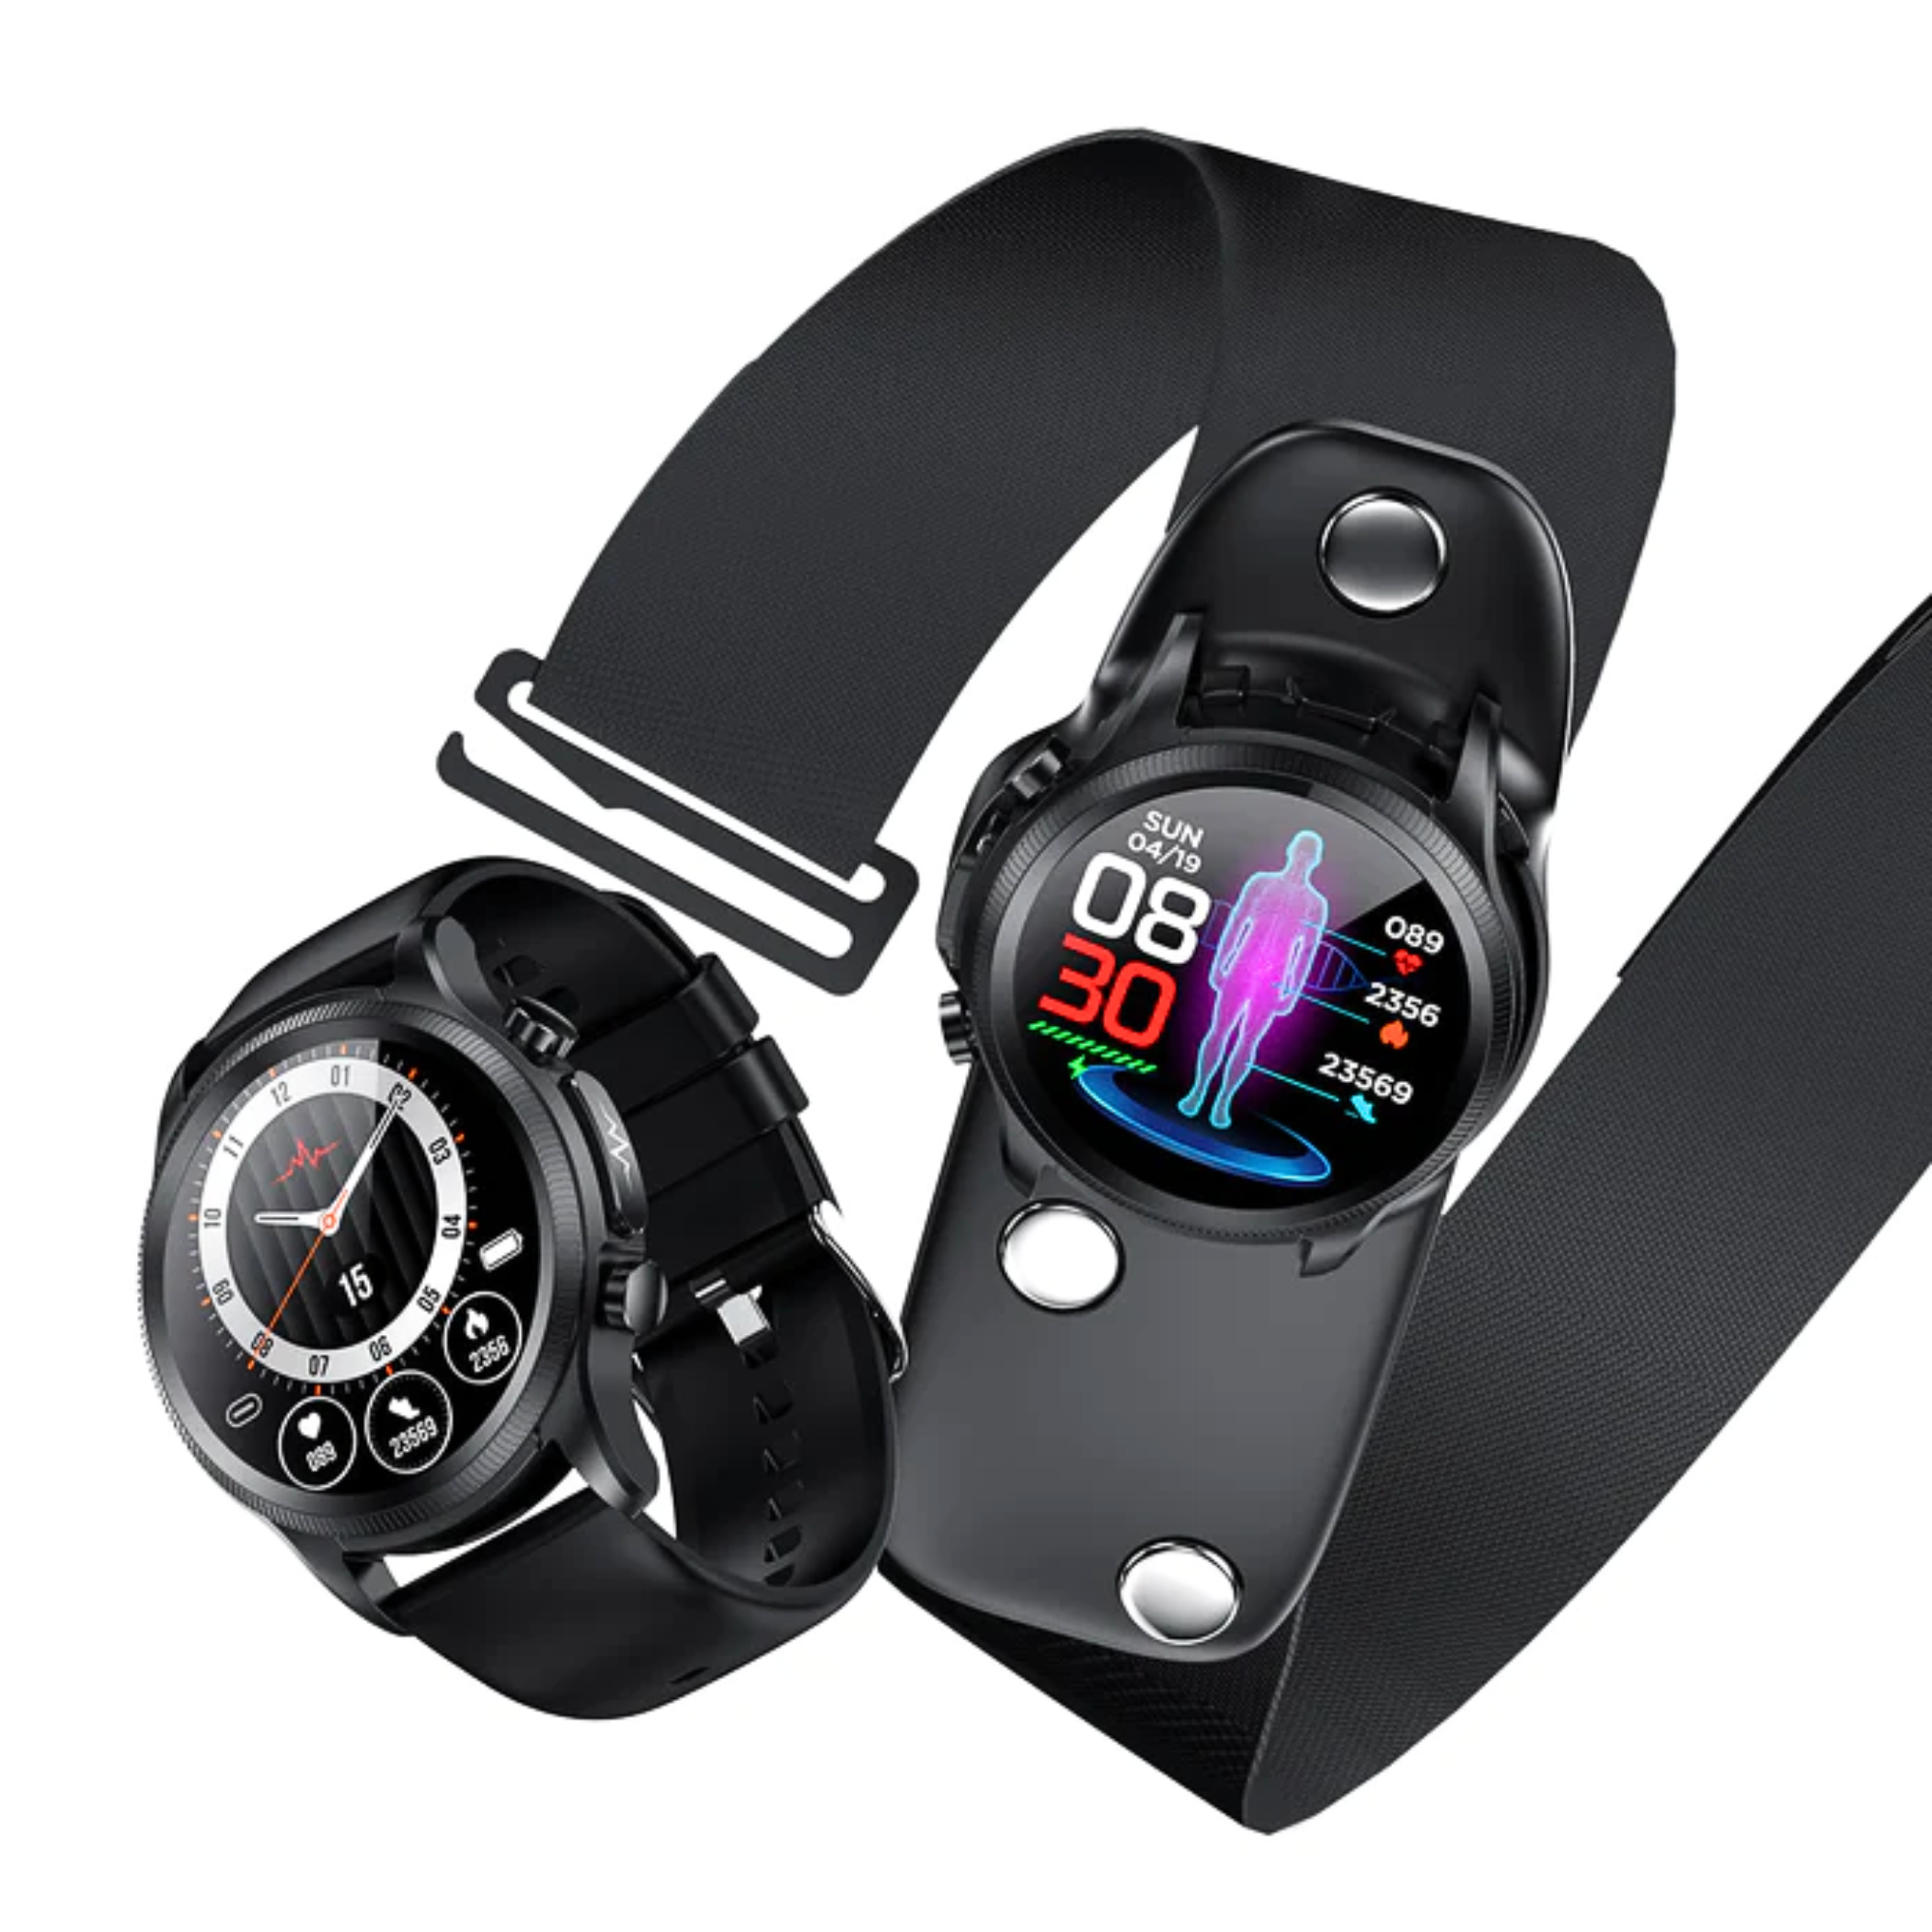 MANIKE E400 ECG + Smartwatch Schwarz 210 Silikon, - steel 140 stainless mm, PPG